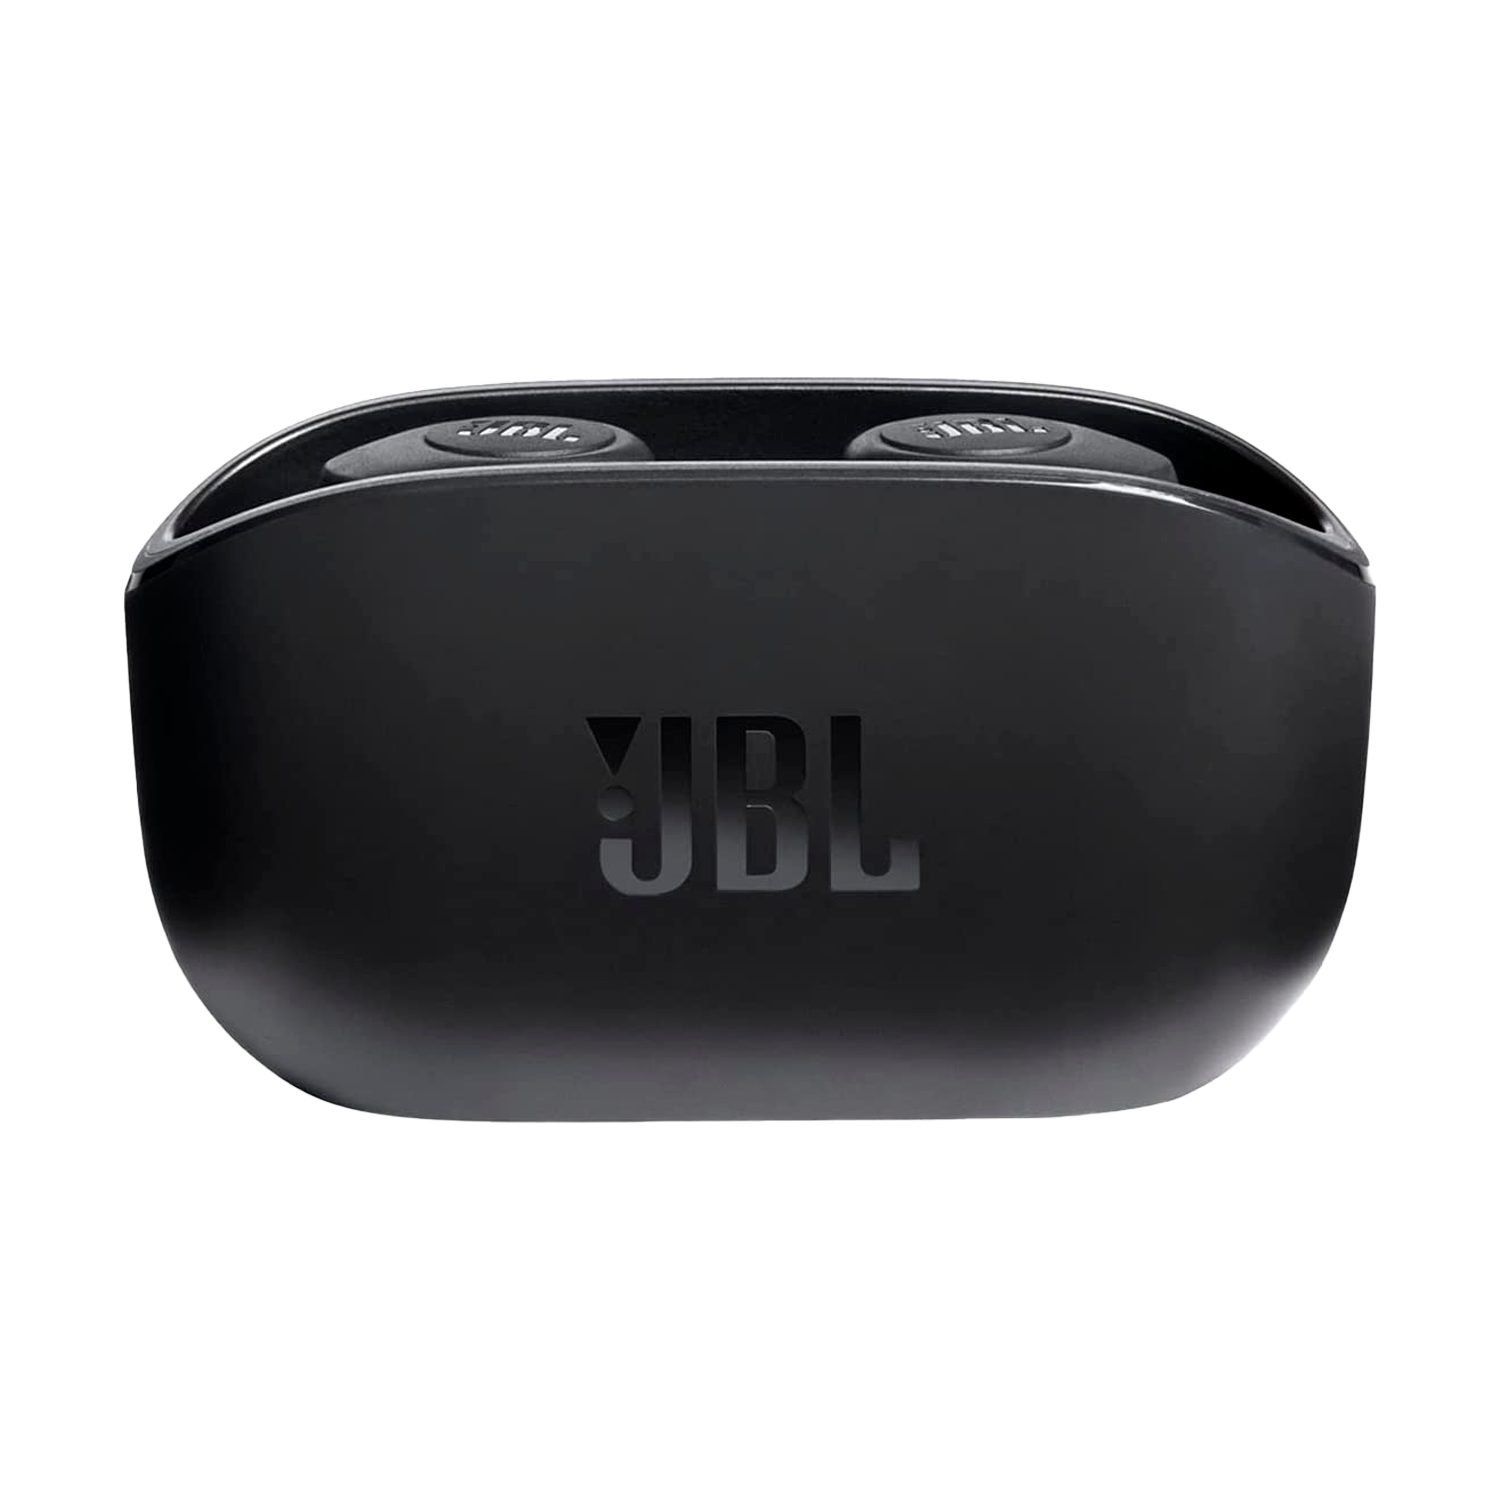 Fone de Ouvido JBL Vibe 100 TWS / Bluetooth - Preto